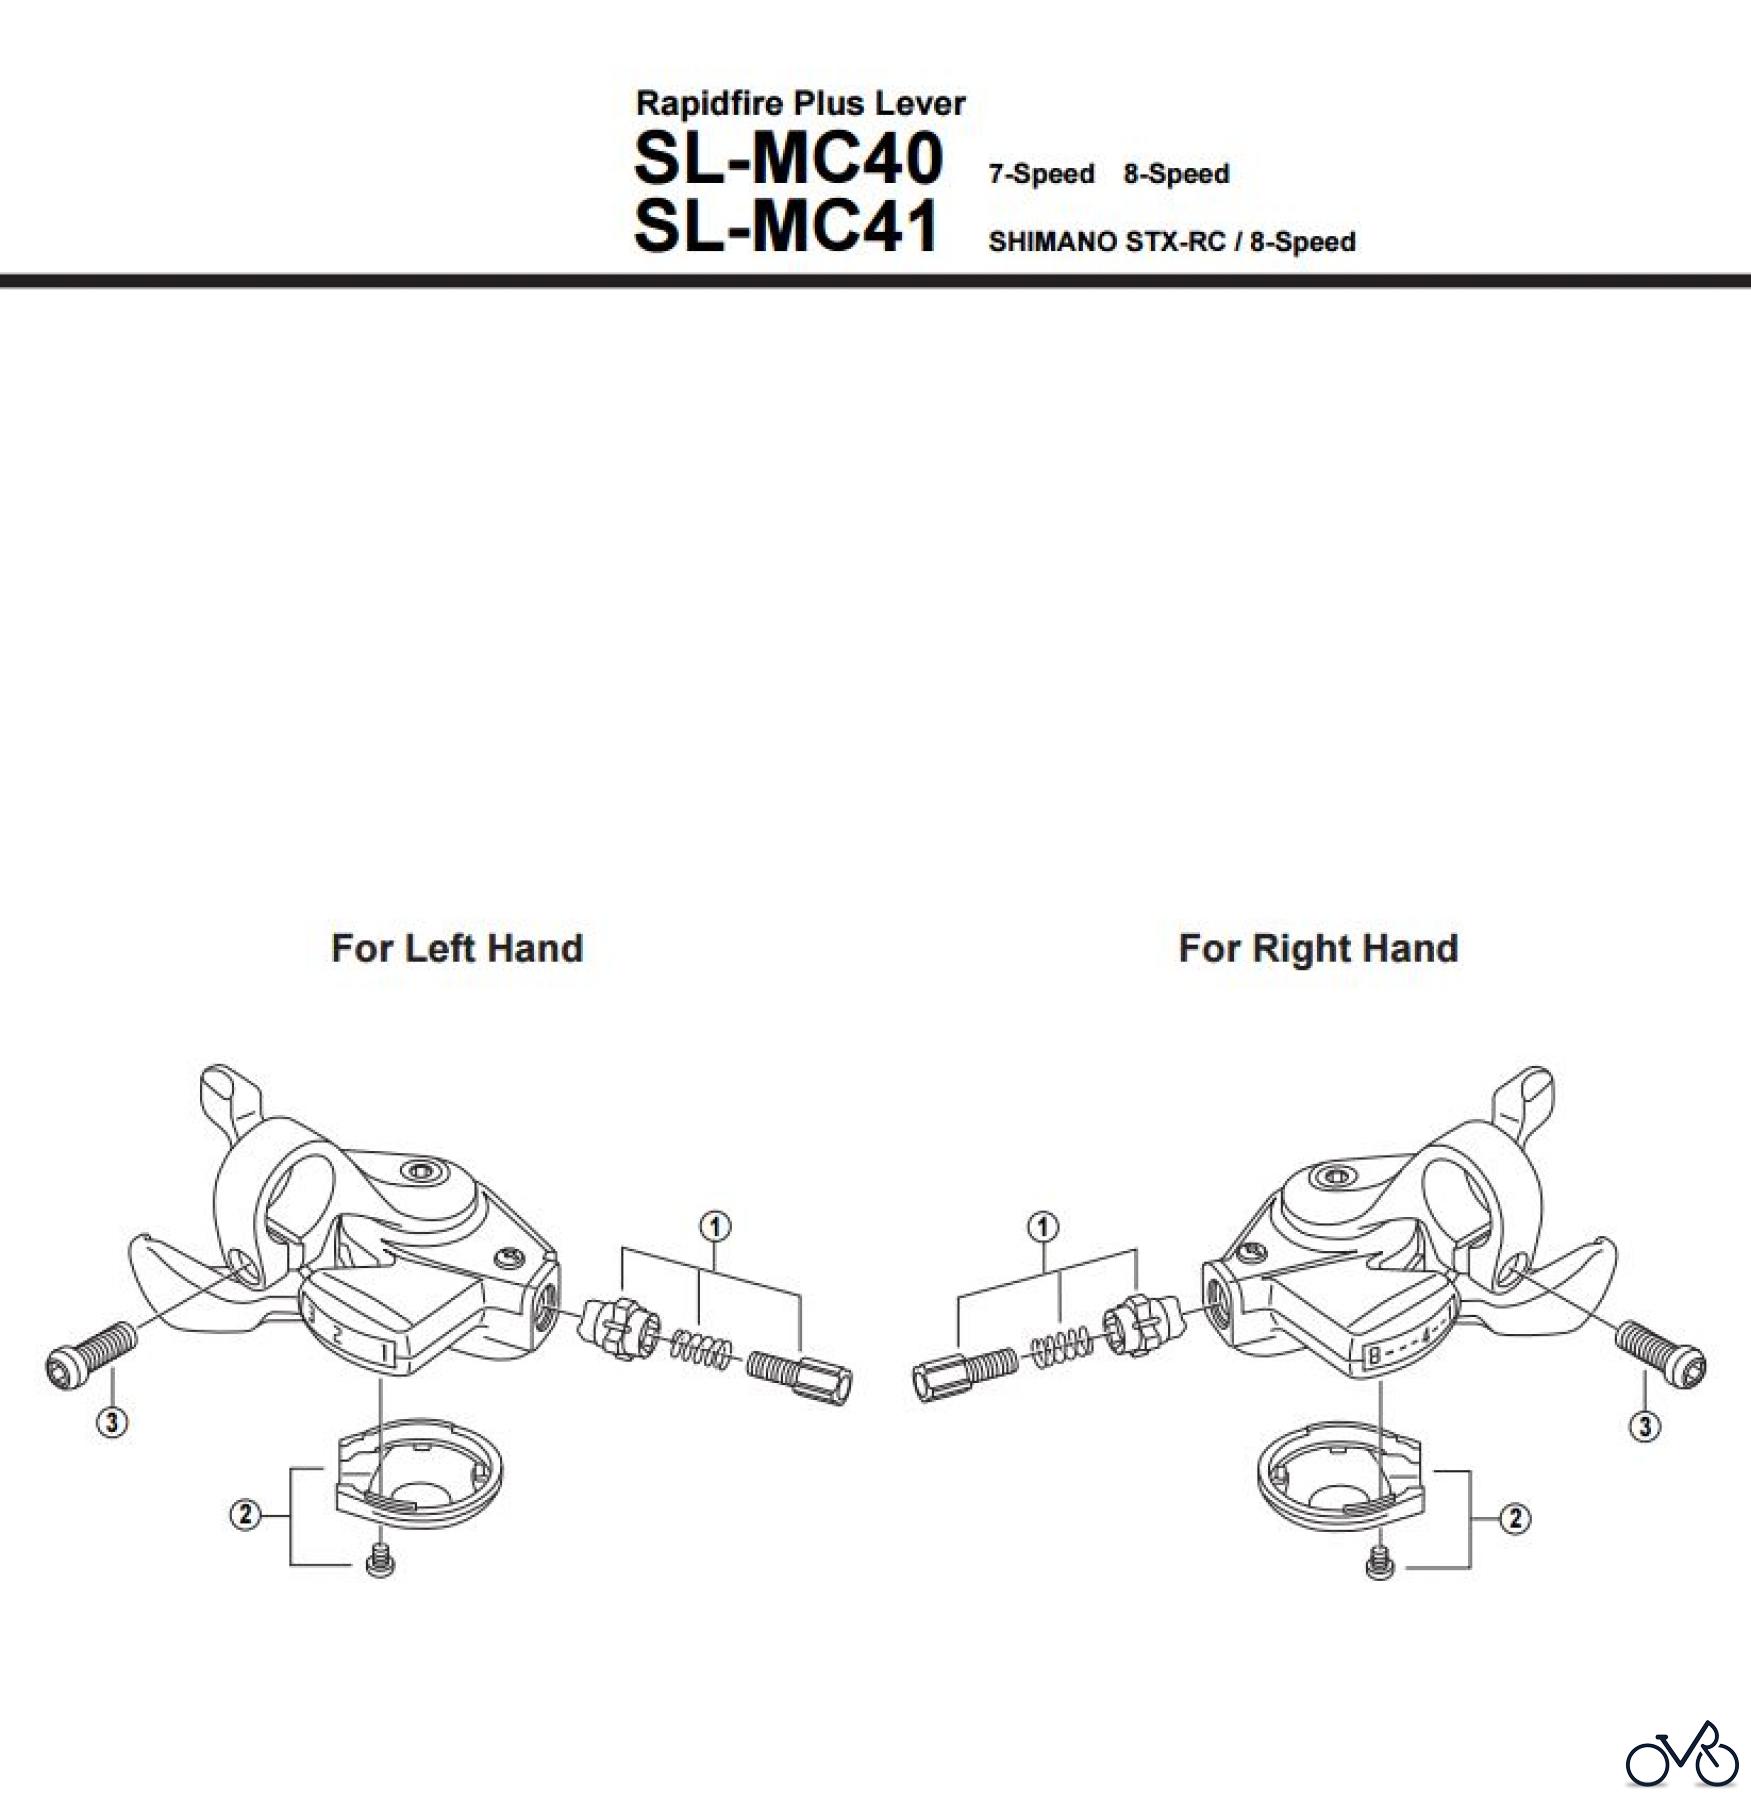  Shimano SL Shift Lever - Schalthebel SL-MC40 -11673B Rapidfire Plus Lever 